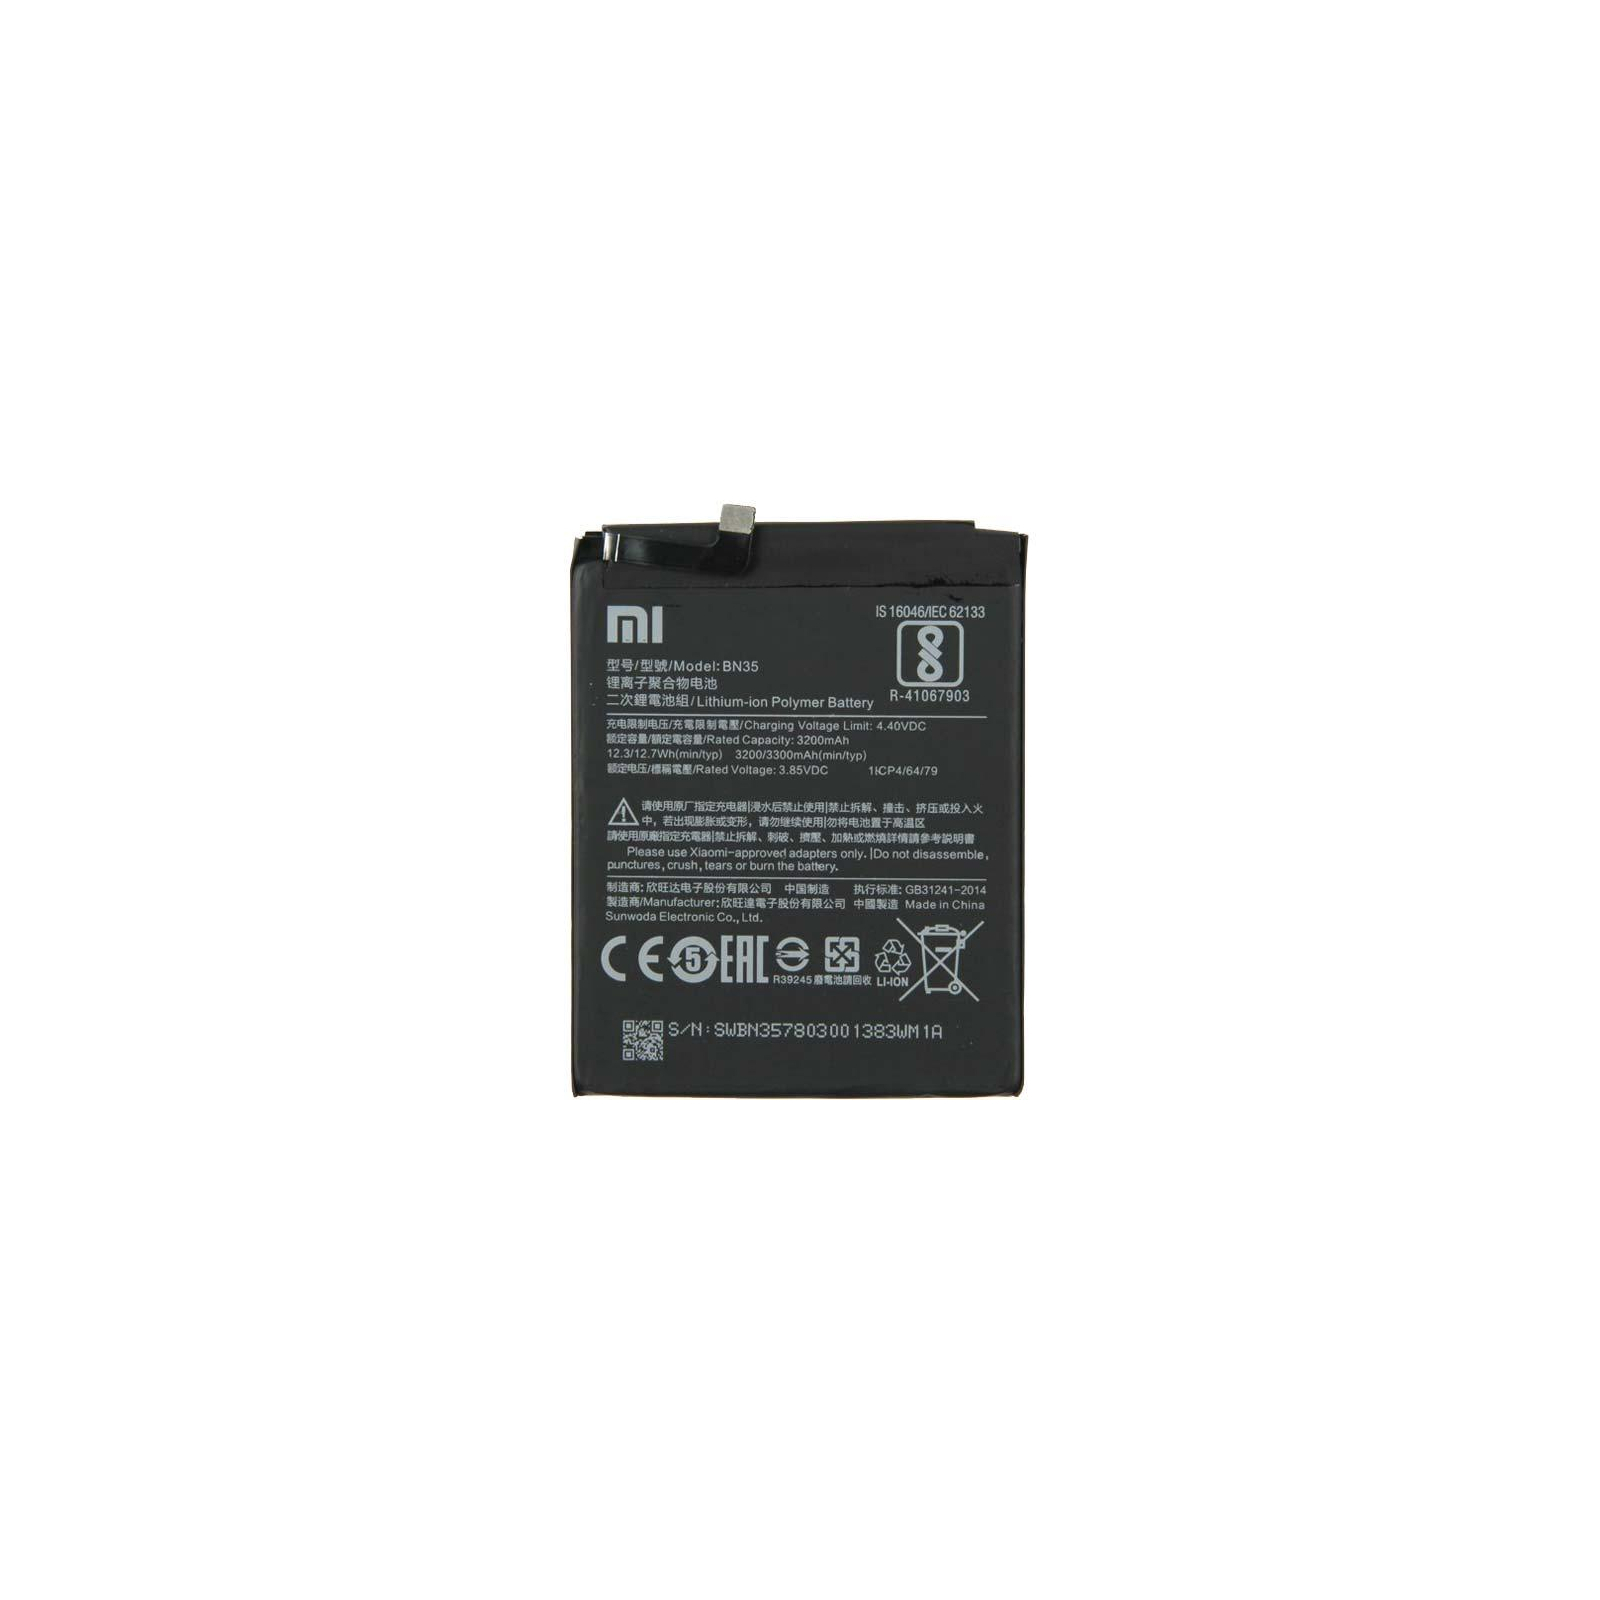 Акумуляторна батарея Xiaomi for Redmi 5 (BN35 / 64513)